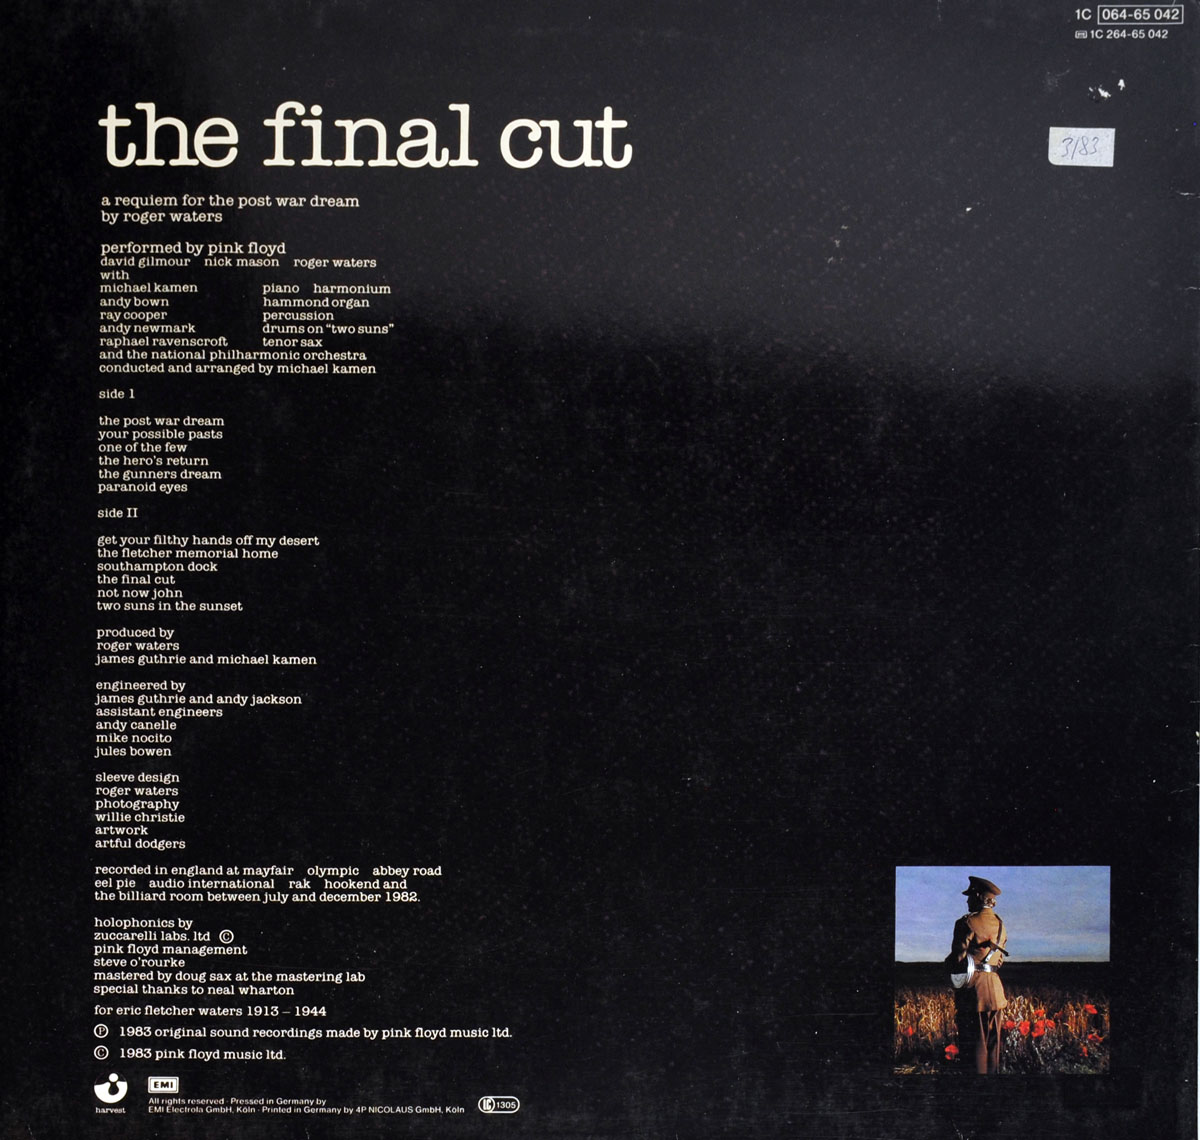 PINK FLOYD Final Cut 12 Vinyl LP Album Vinyl Album Cover Gallery &  Information #vinylrecords